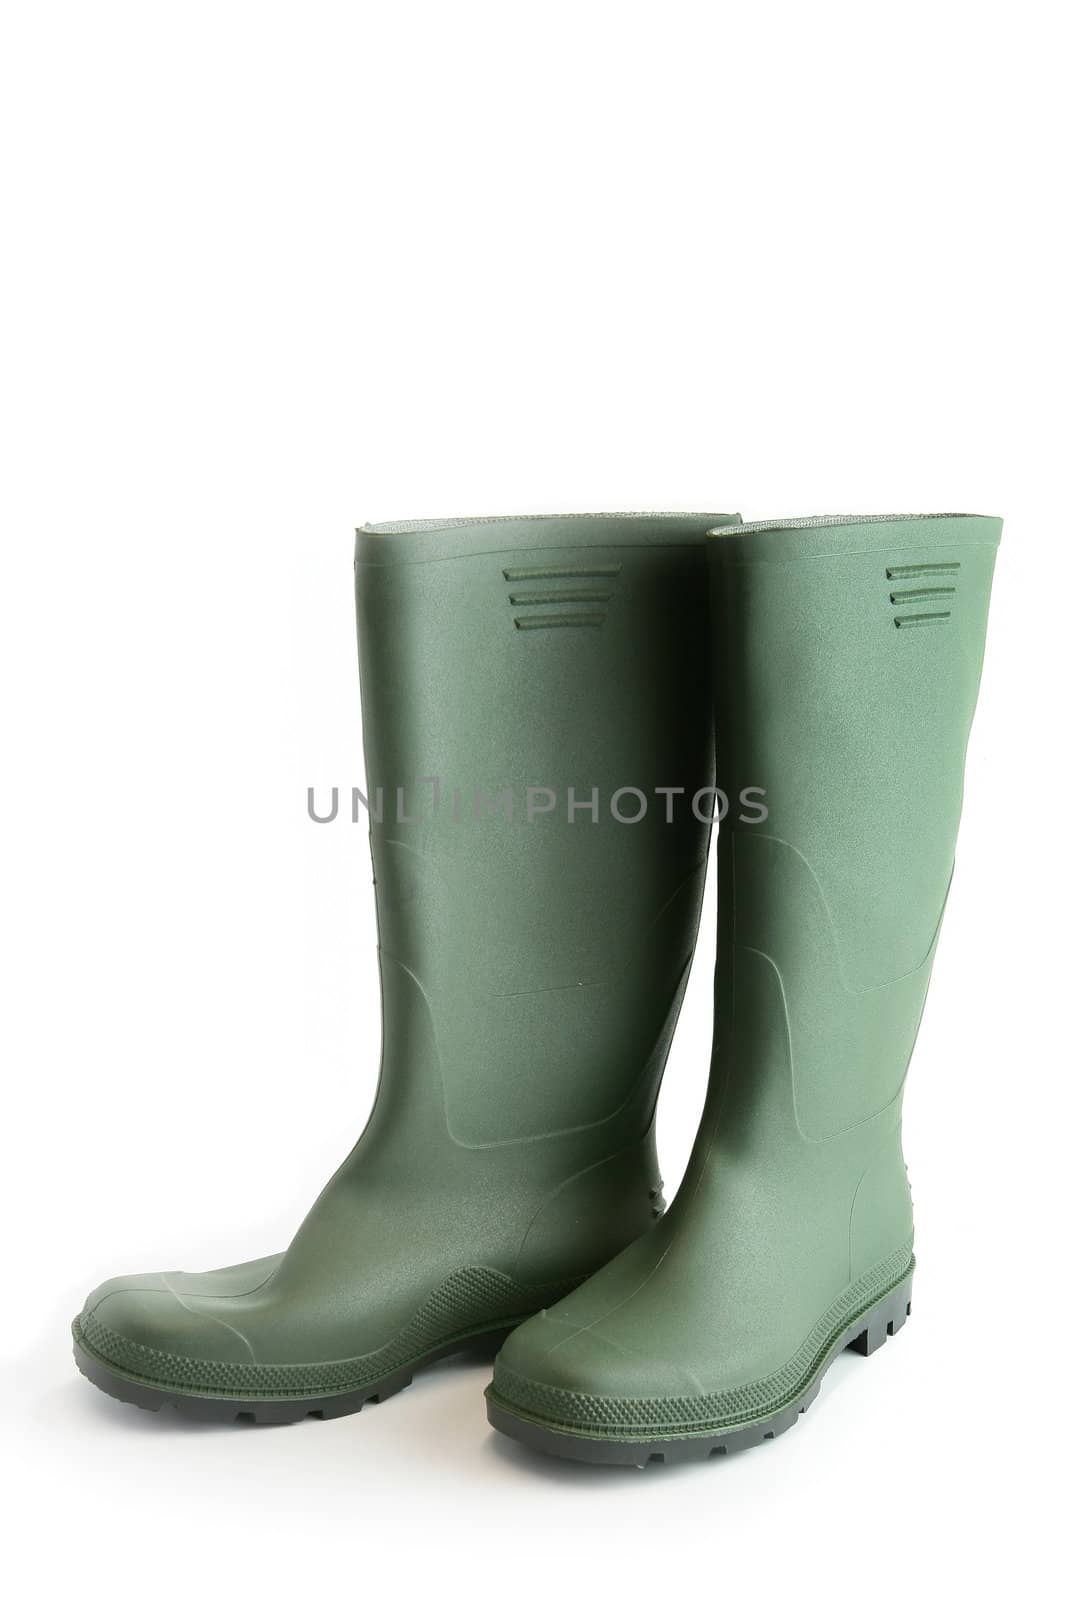 Wellington boots by phovoir